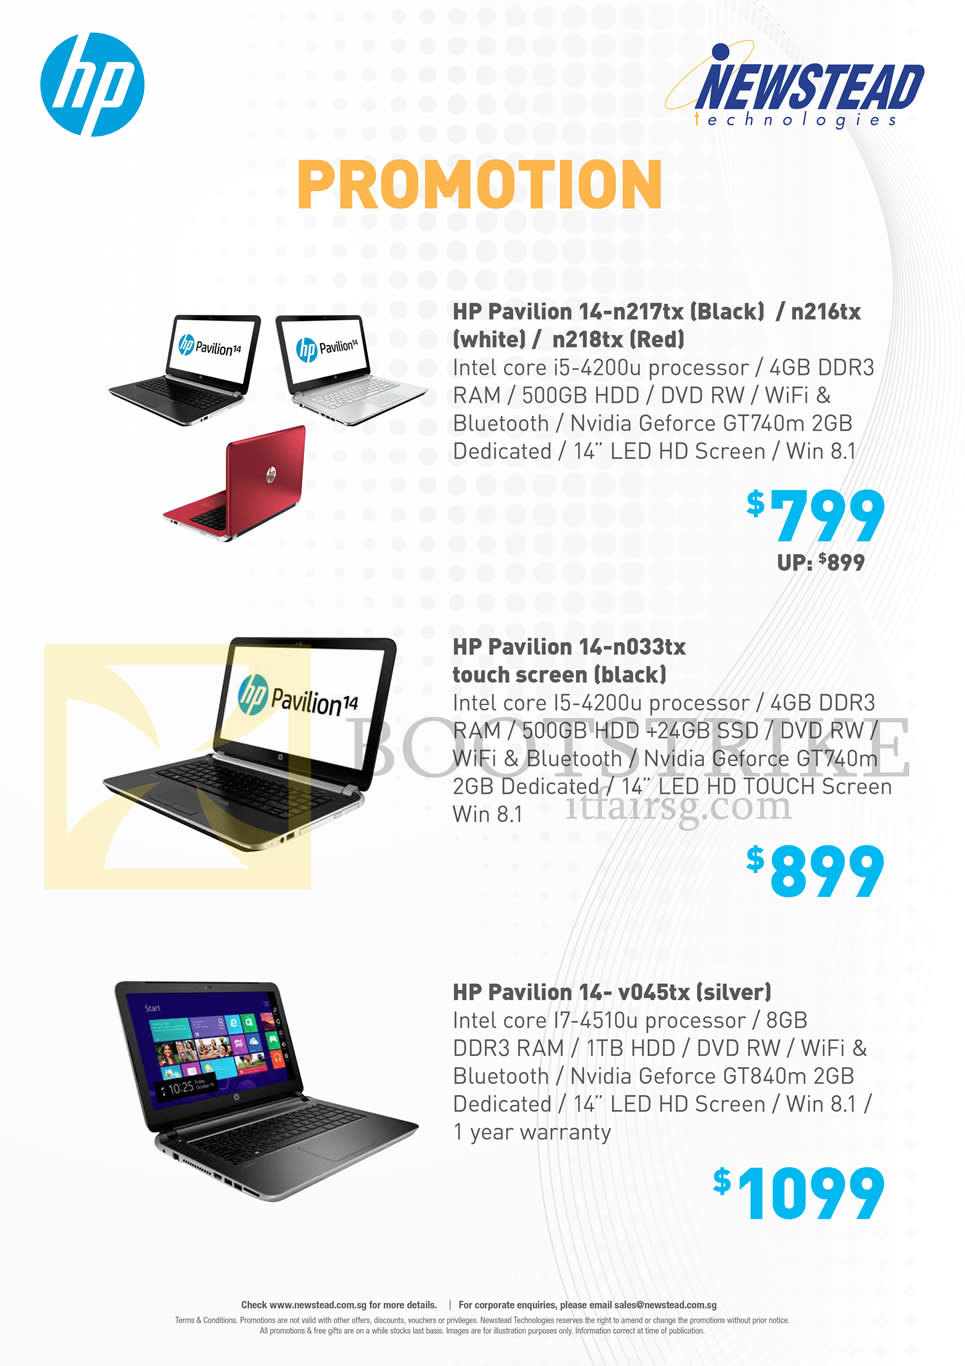 SITEX 2014 price list image brochure of HP Newstead Notebooks Pavilion 14-n217tx, 14-n216tx, 14-n218tx, 14-n033tx, 14- V045tx